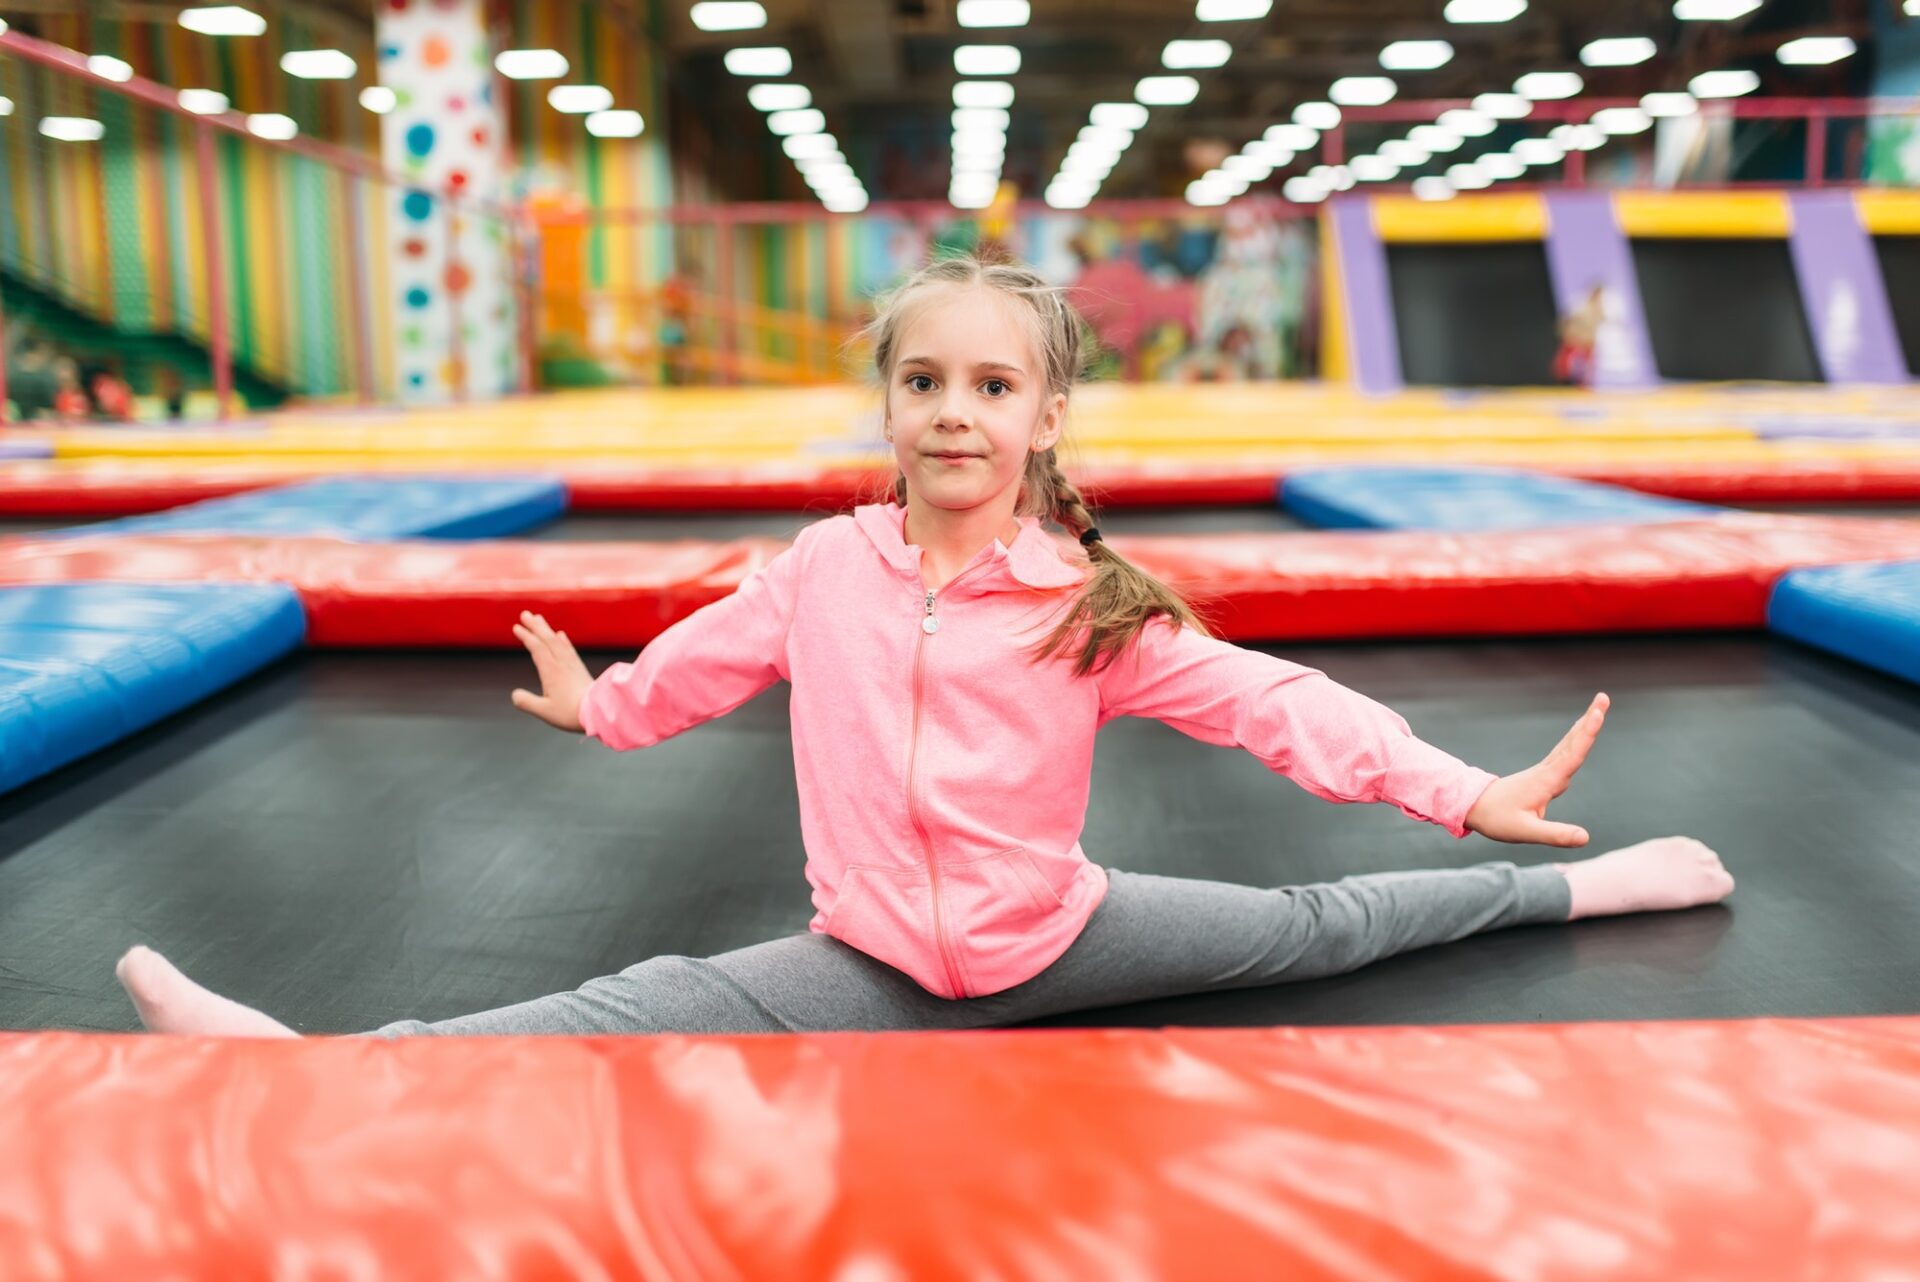 Flexible girl on playground, entertainment center